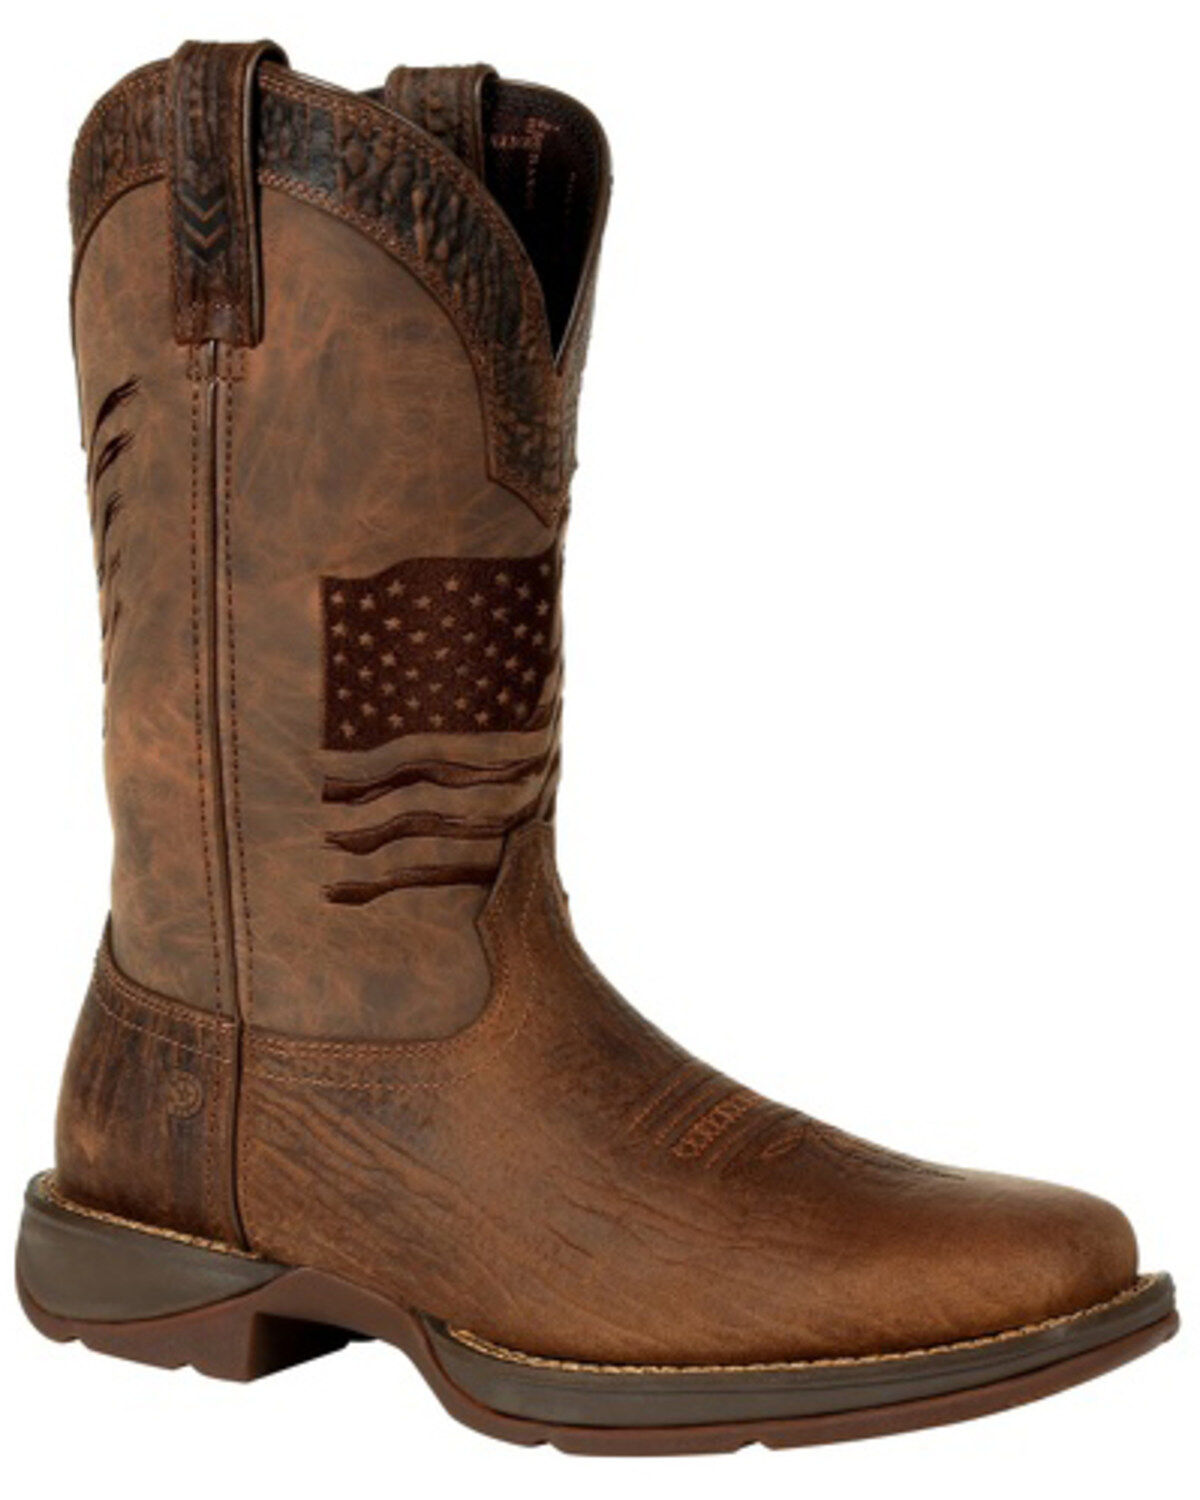 Durango Boots: Cowboy Boots, Work Boots 